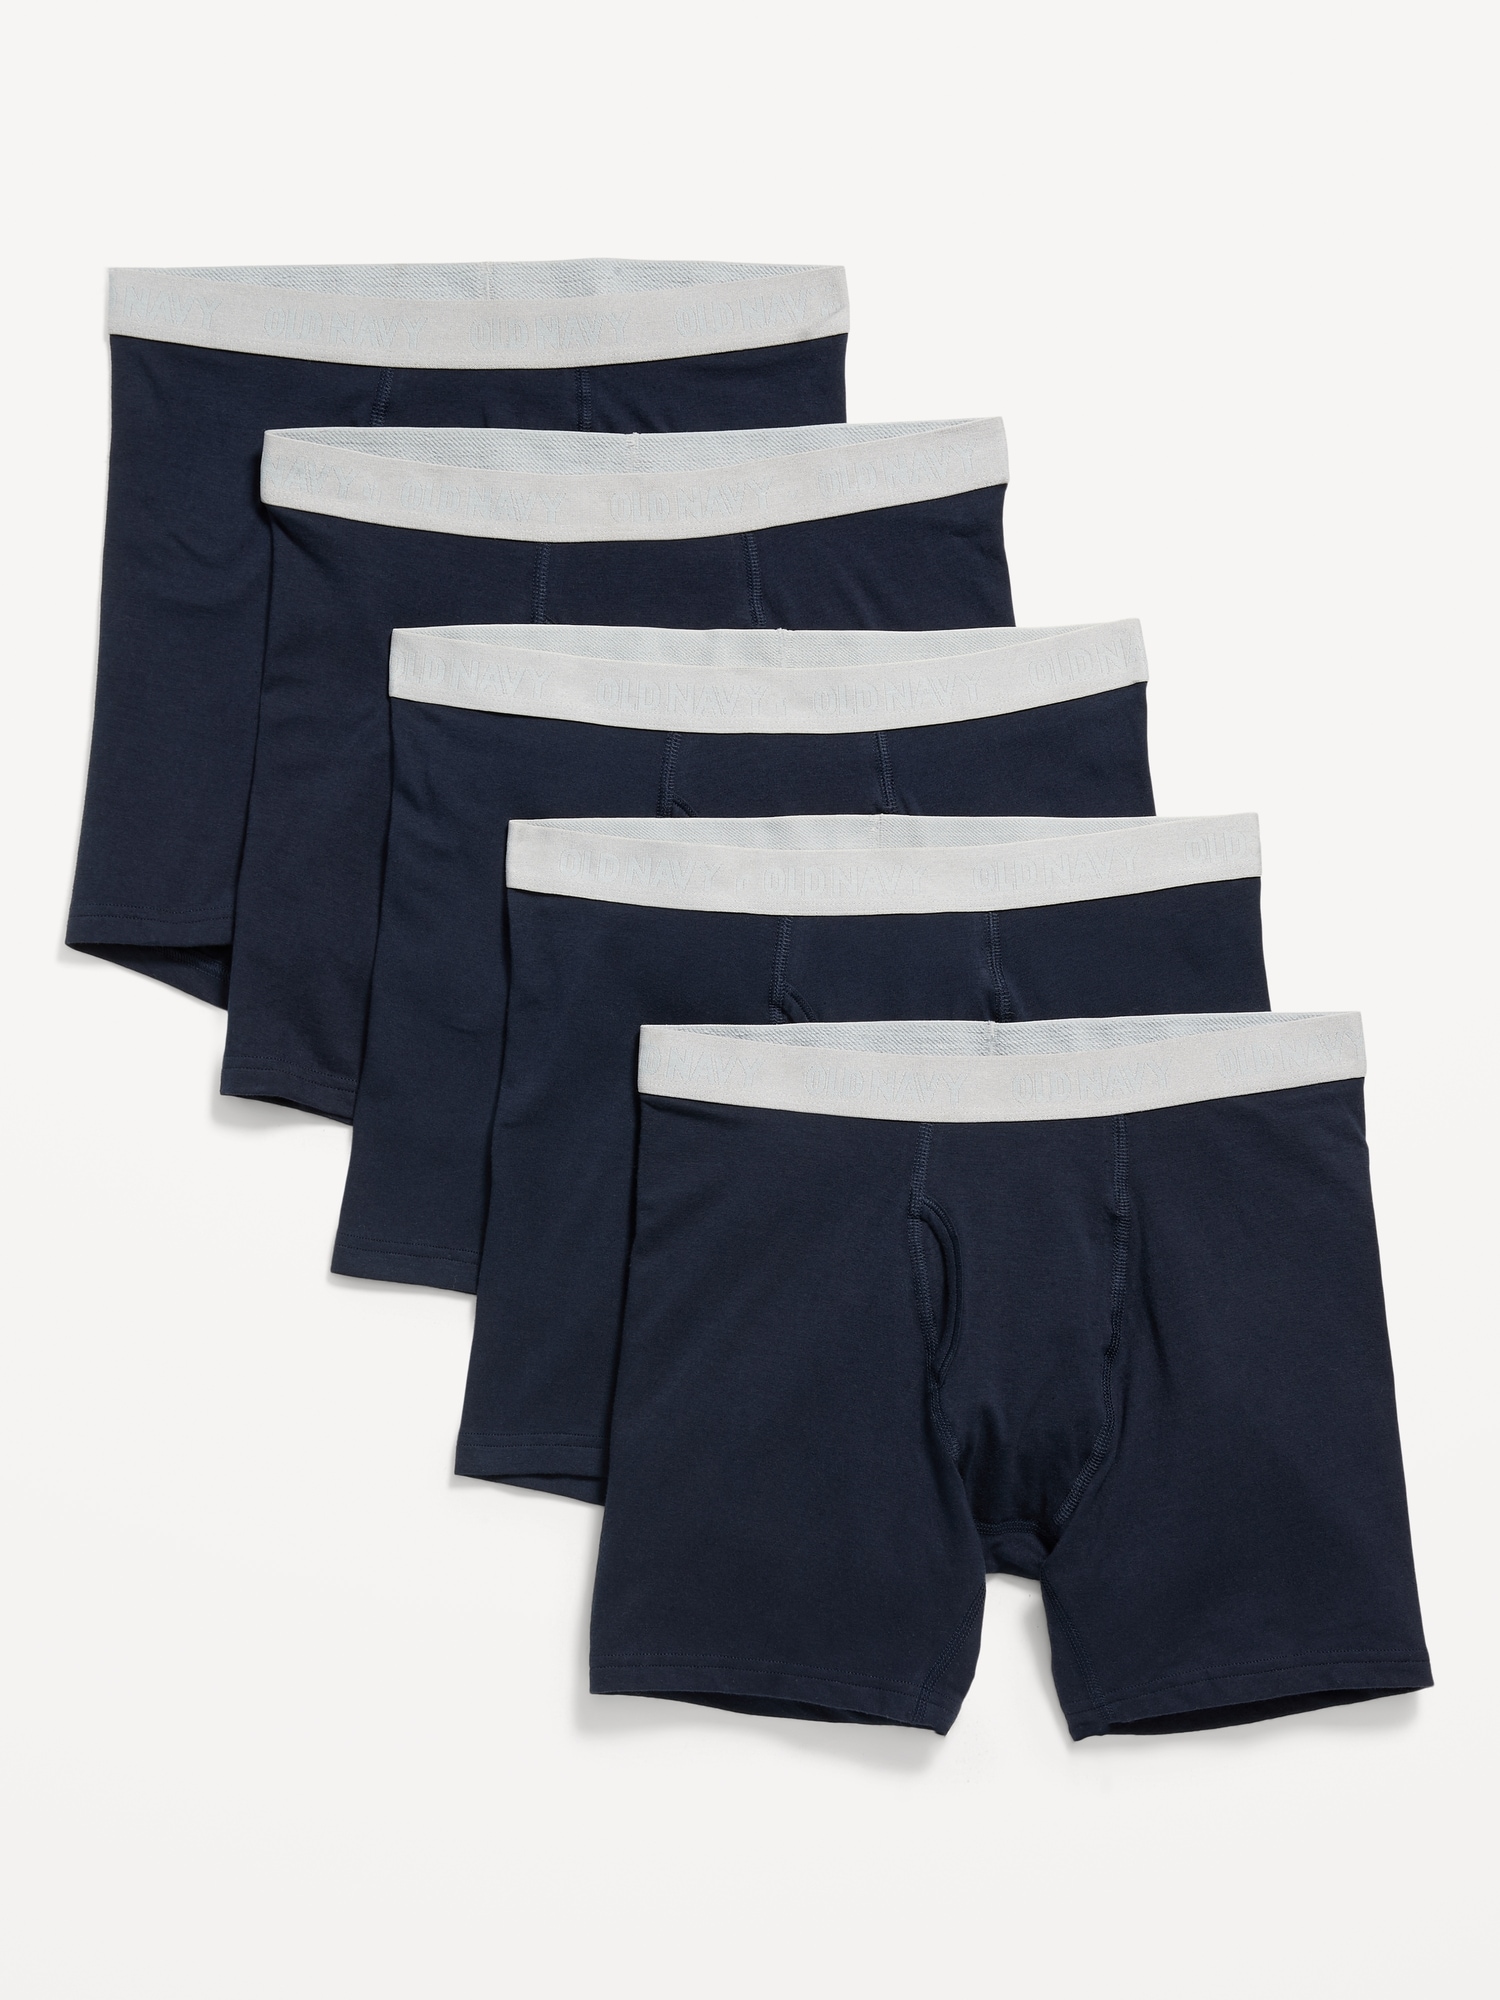 Soft-Washed Built-In Flex Boxer-Brief Underwear 5-Pack for Men -- 6.25 ...